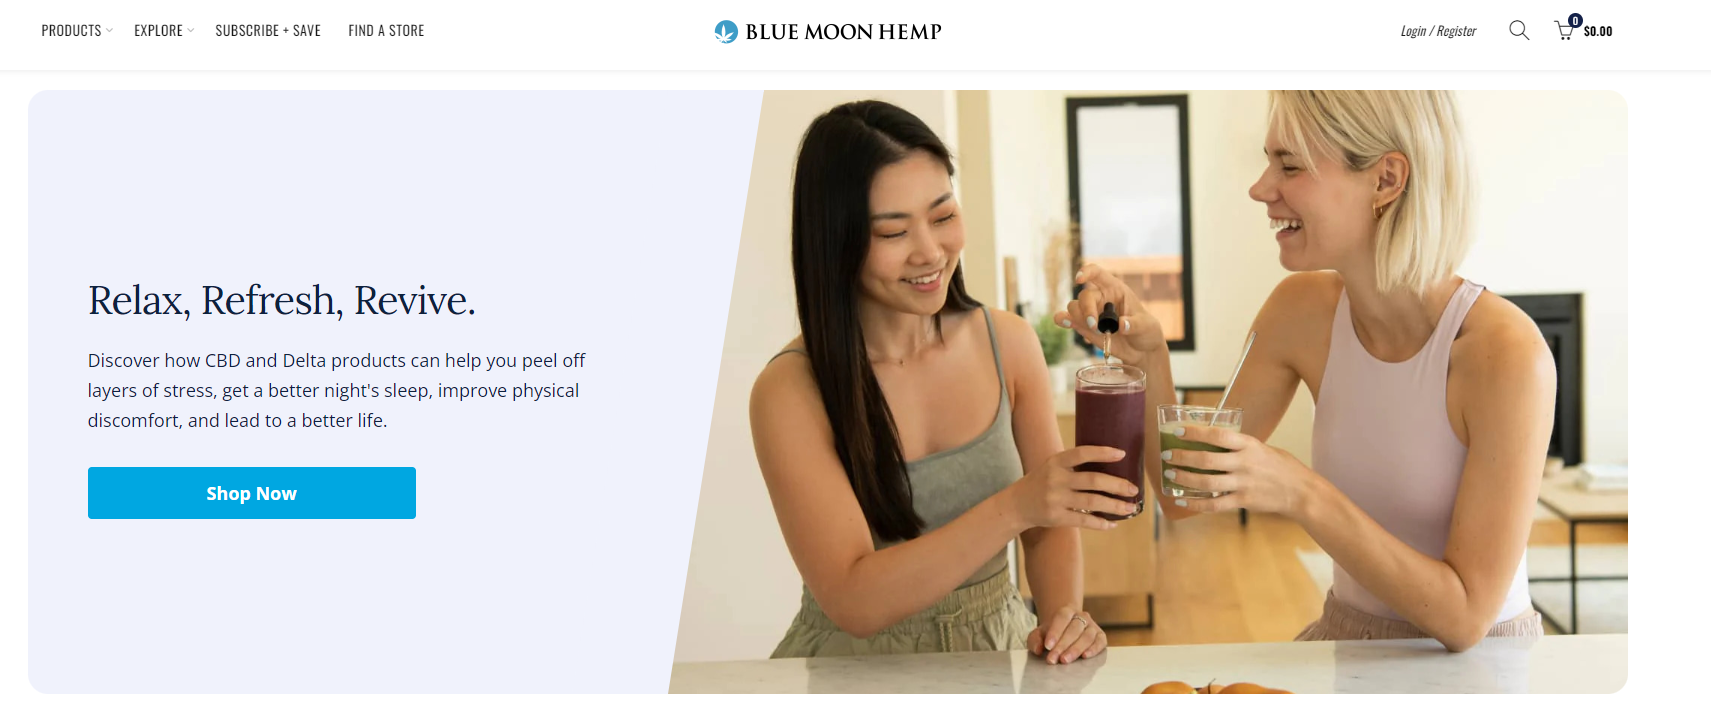 Blue Moon Hemp Affiliate Program Homepage Image